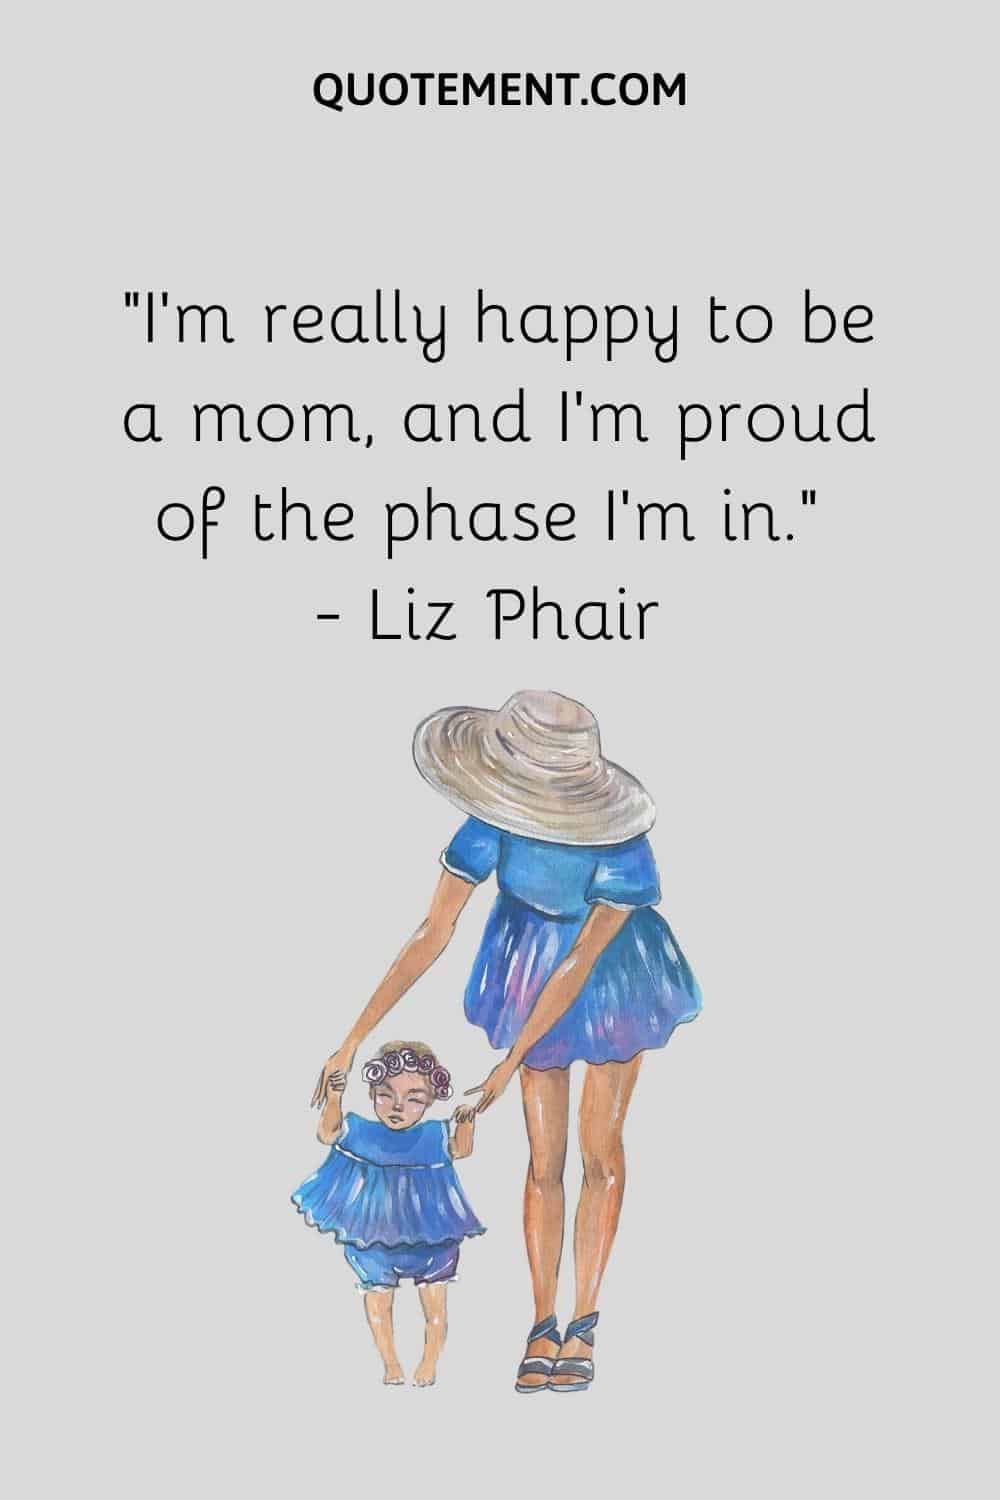 “I’m really happy to be a mom, and I’m proud of the phase I’m in.” — Liz Phair